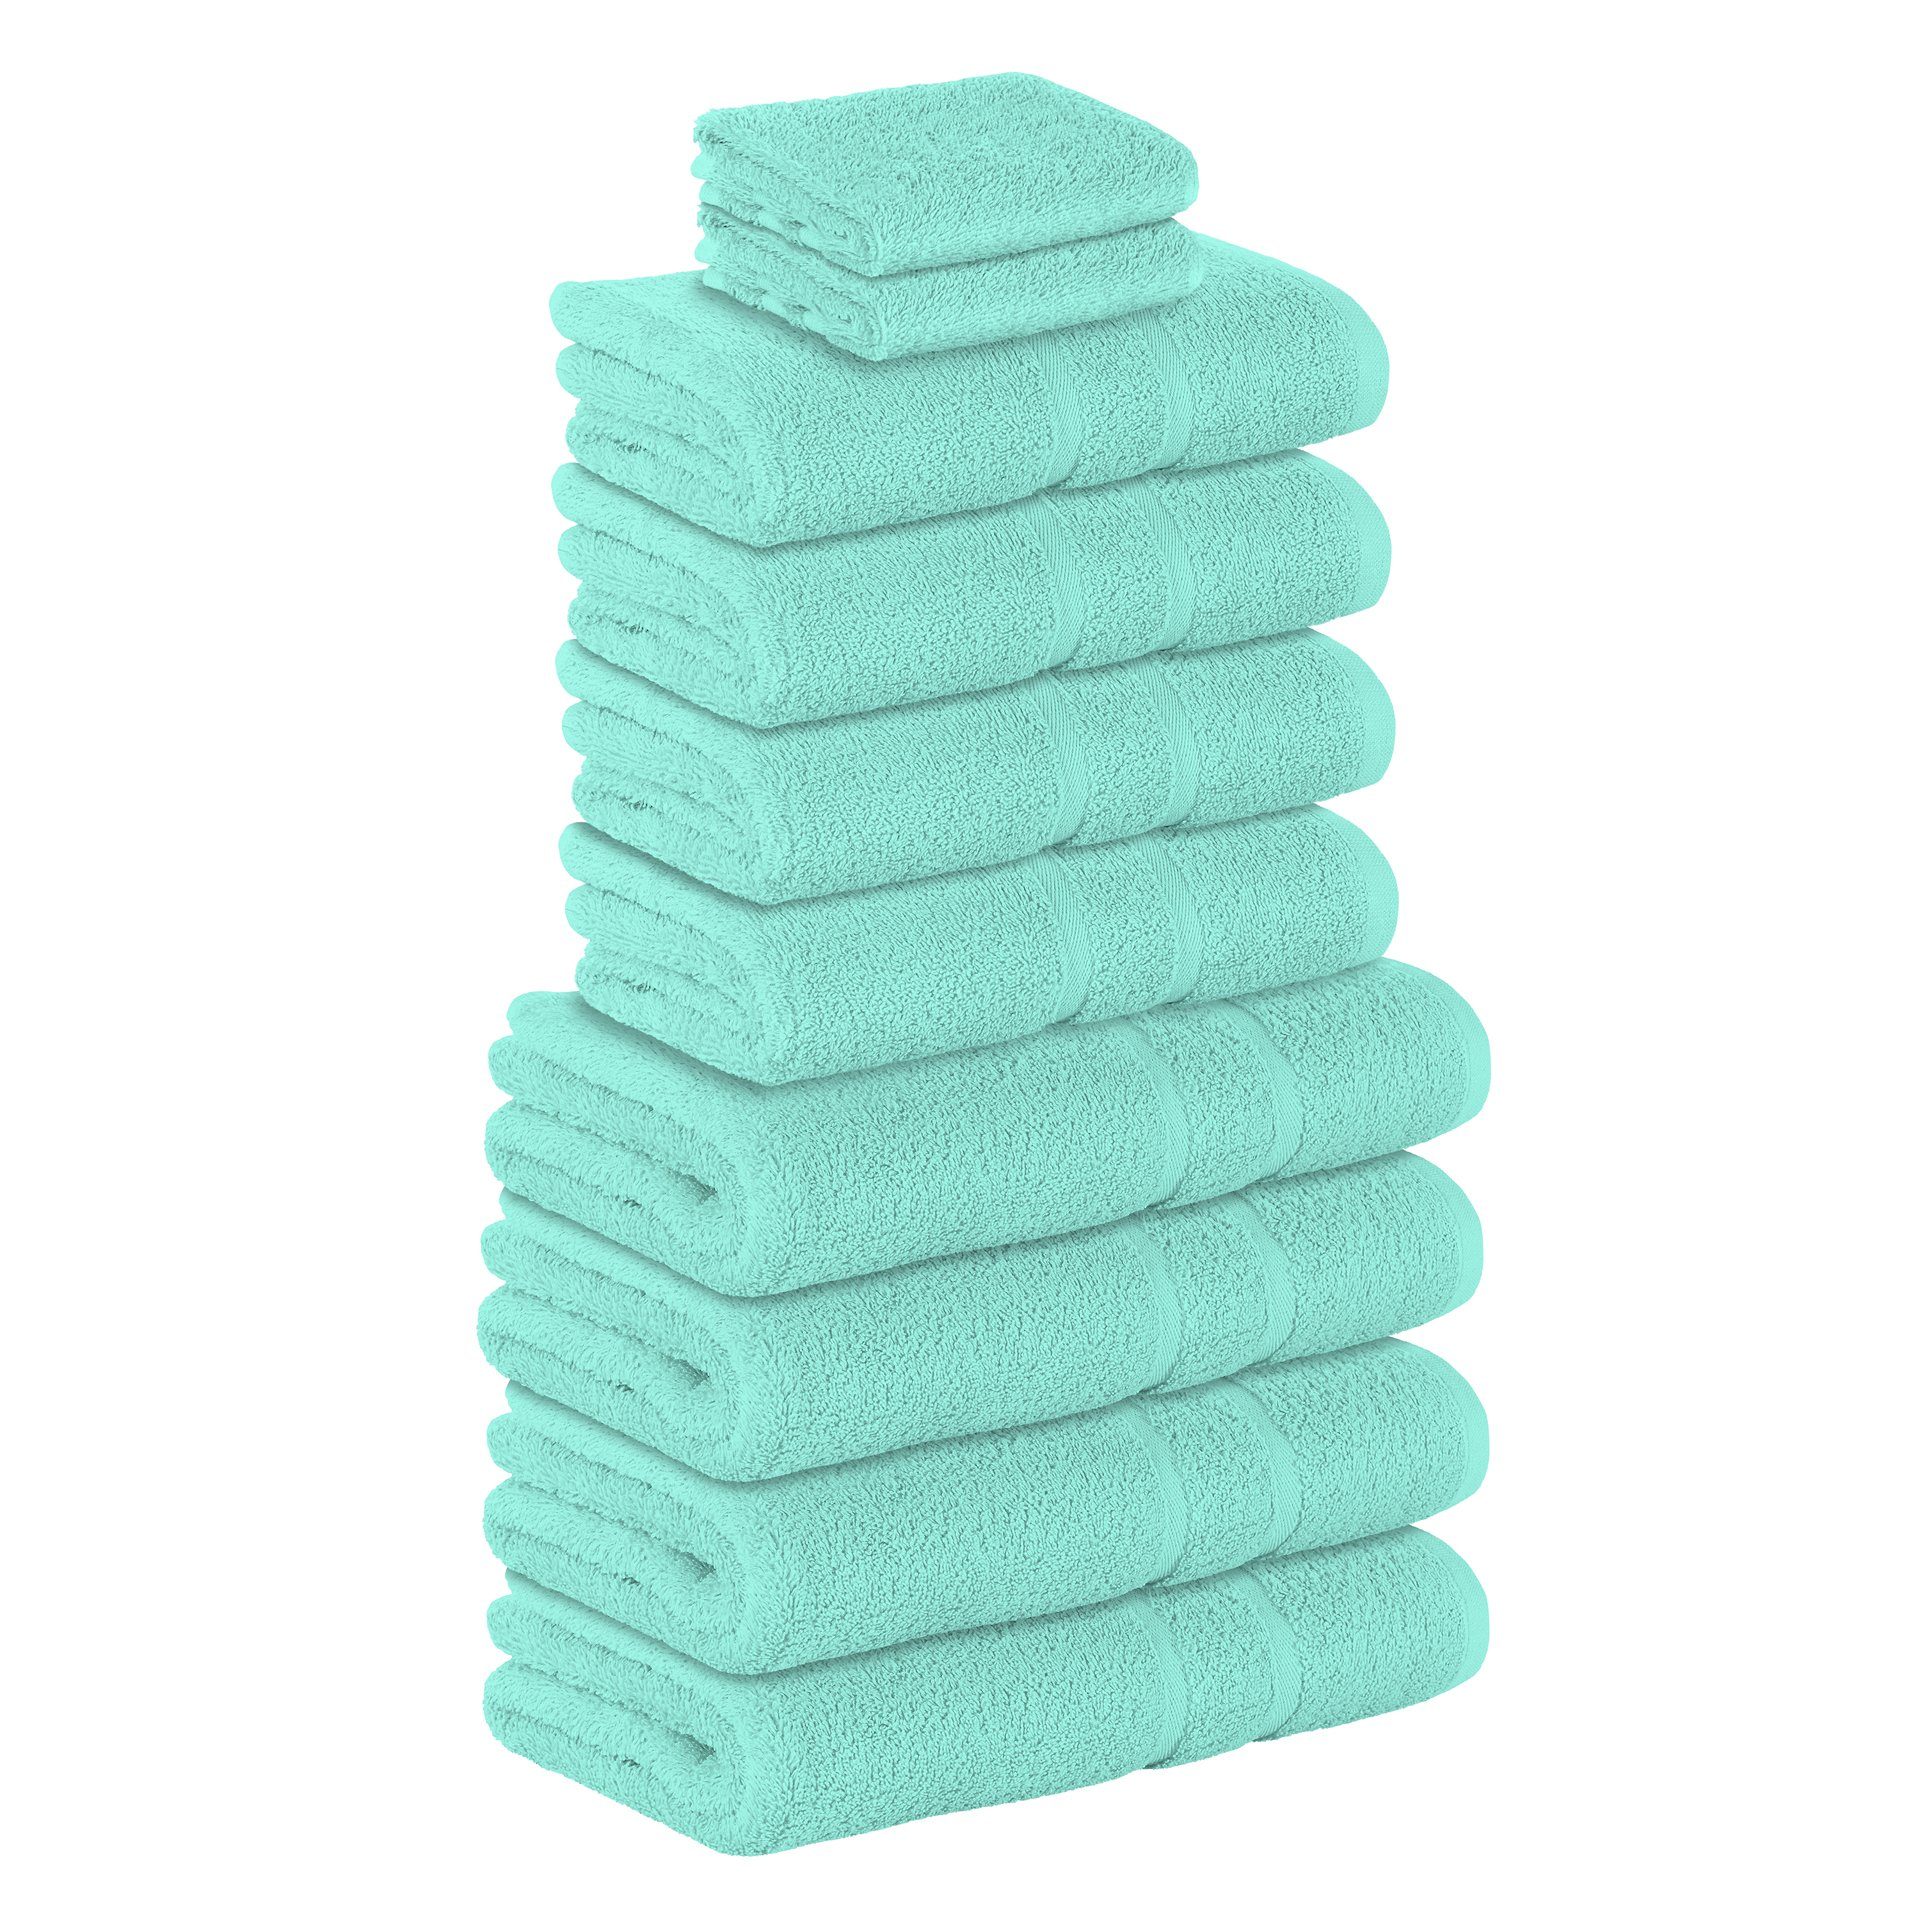 StickandShine Handtuch Set 2x Gästehandtuch 4x Handtücher 4x Duschtücher als SET in verschiedenen Farben (10 Teilig) 100% Baumwolle 500 GSM Frottee 10er Handtuch Pack, (Spar-set), 100% Baumwolle 500 GSM Mint